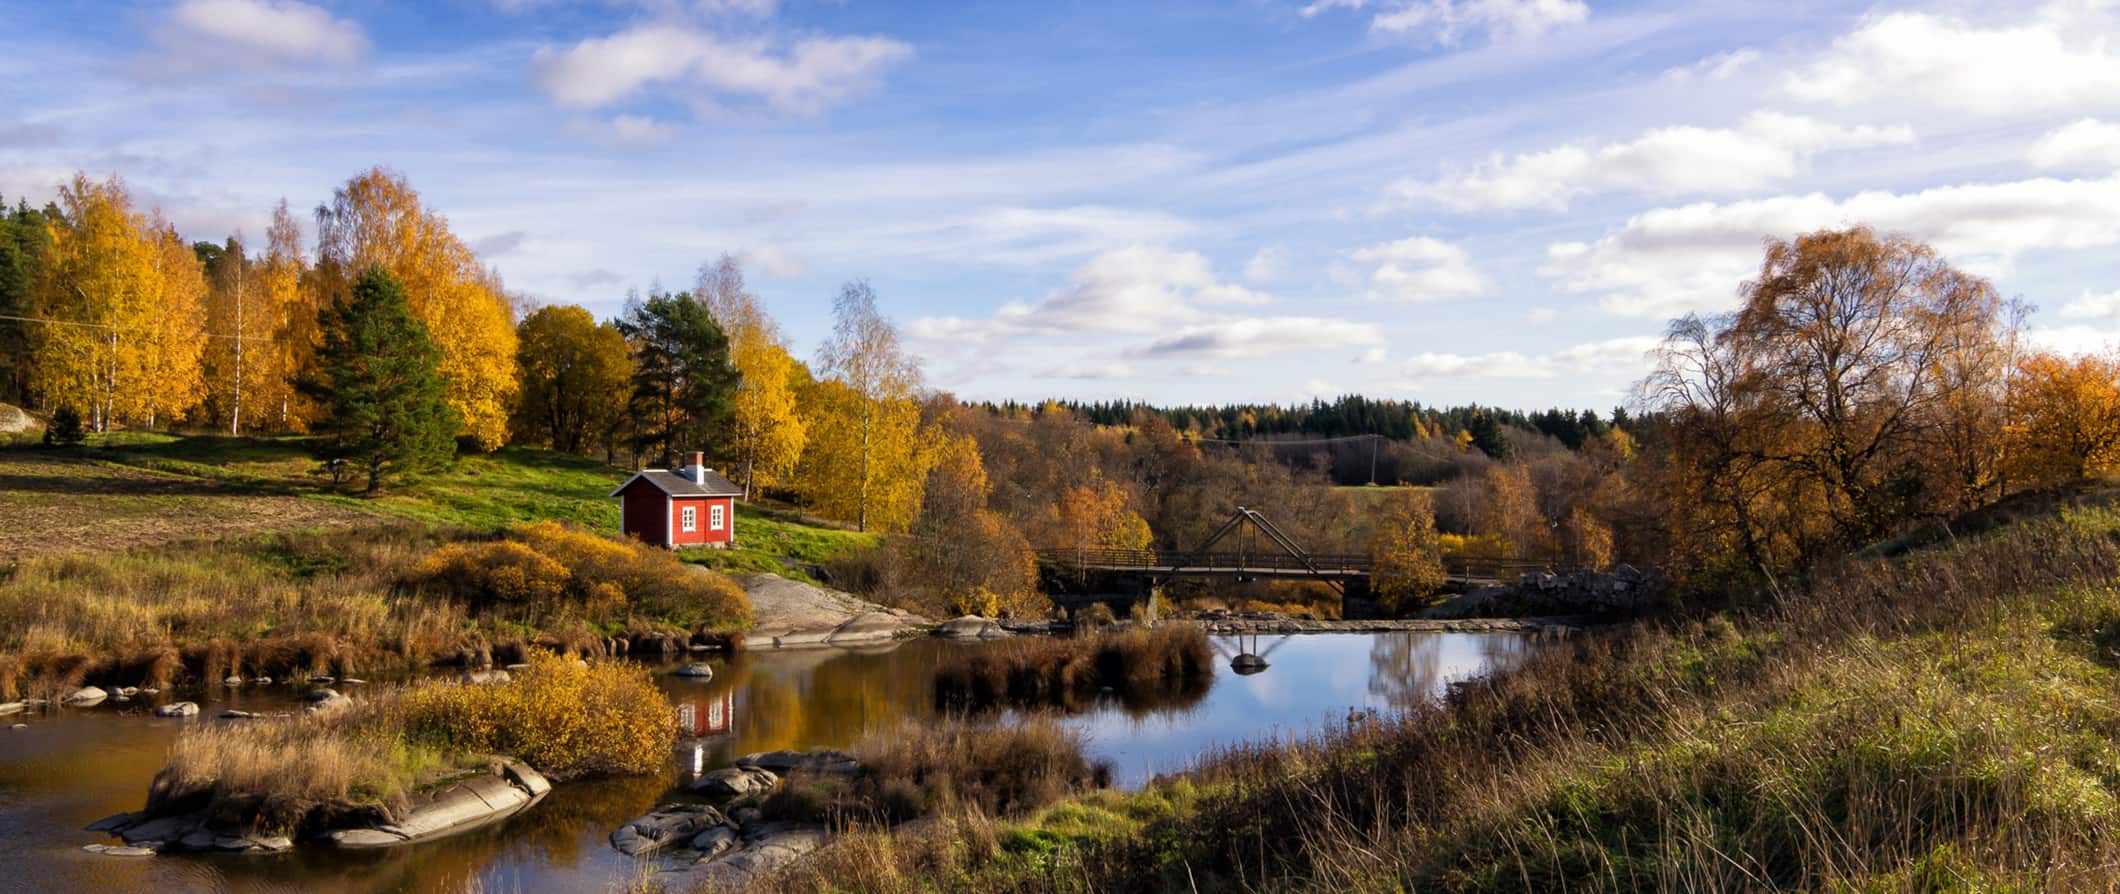 a serene nature scene in Finland